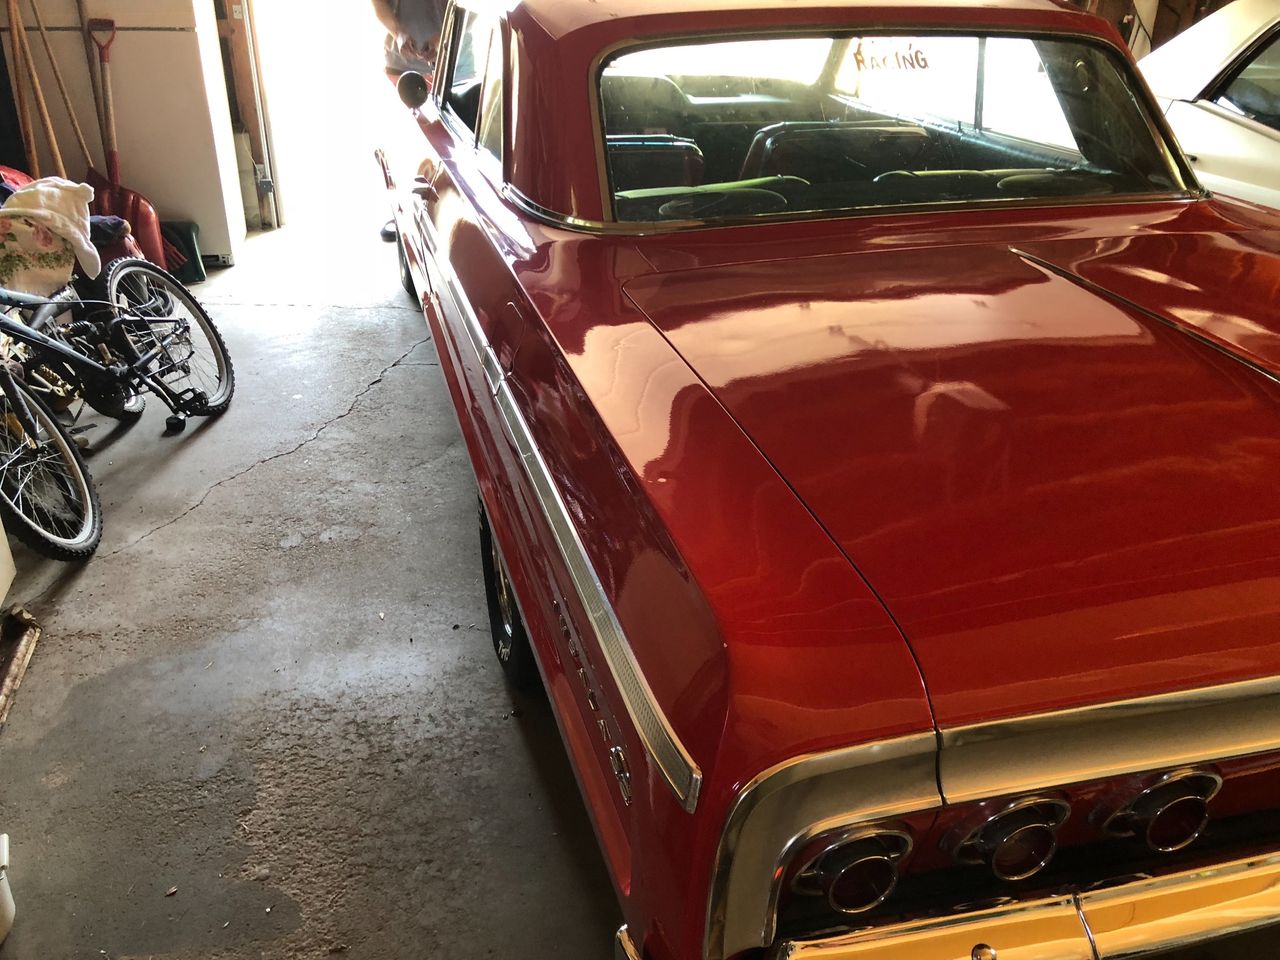 1964 Chevrolet Impala | Sioux Falls, SD, Red & Orange